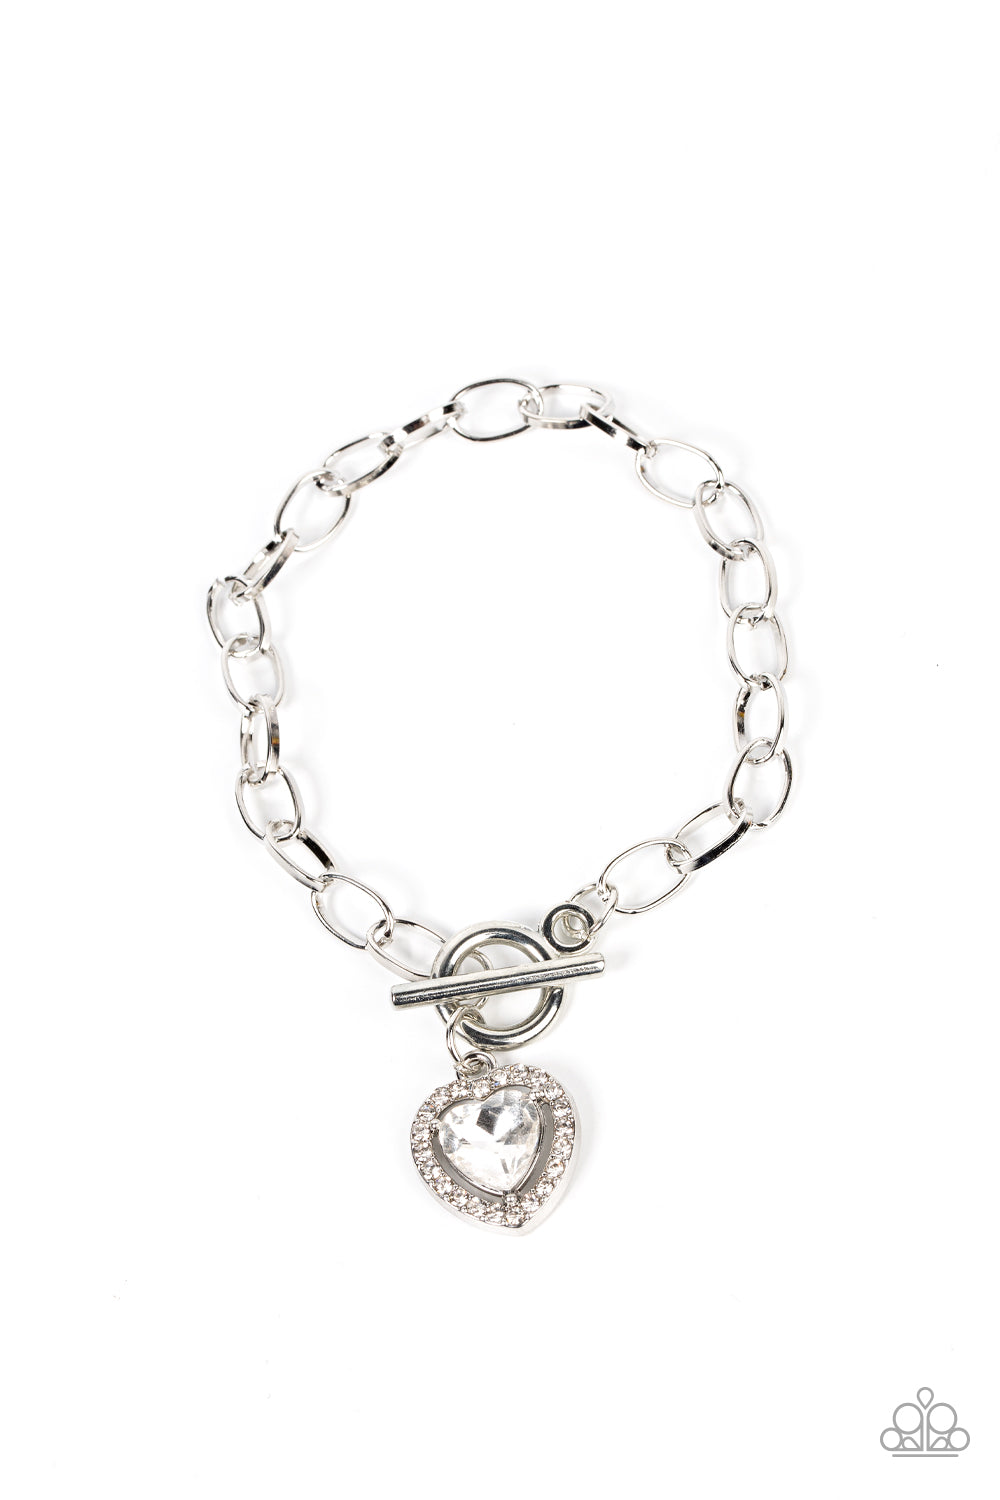 Till DAZZLE Do Us Part - White gem heart bracelet